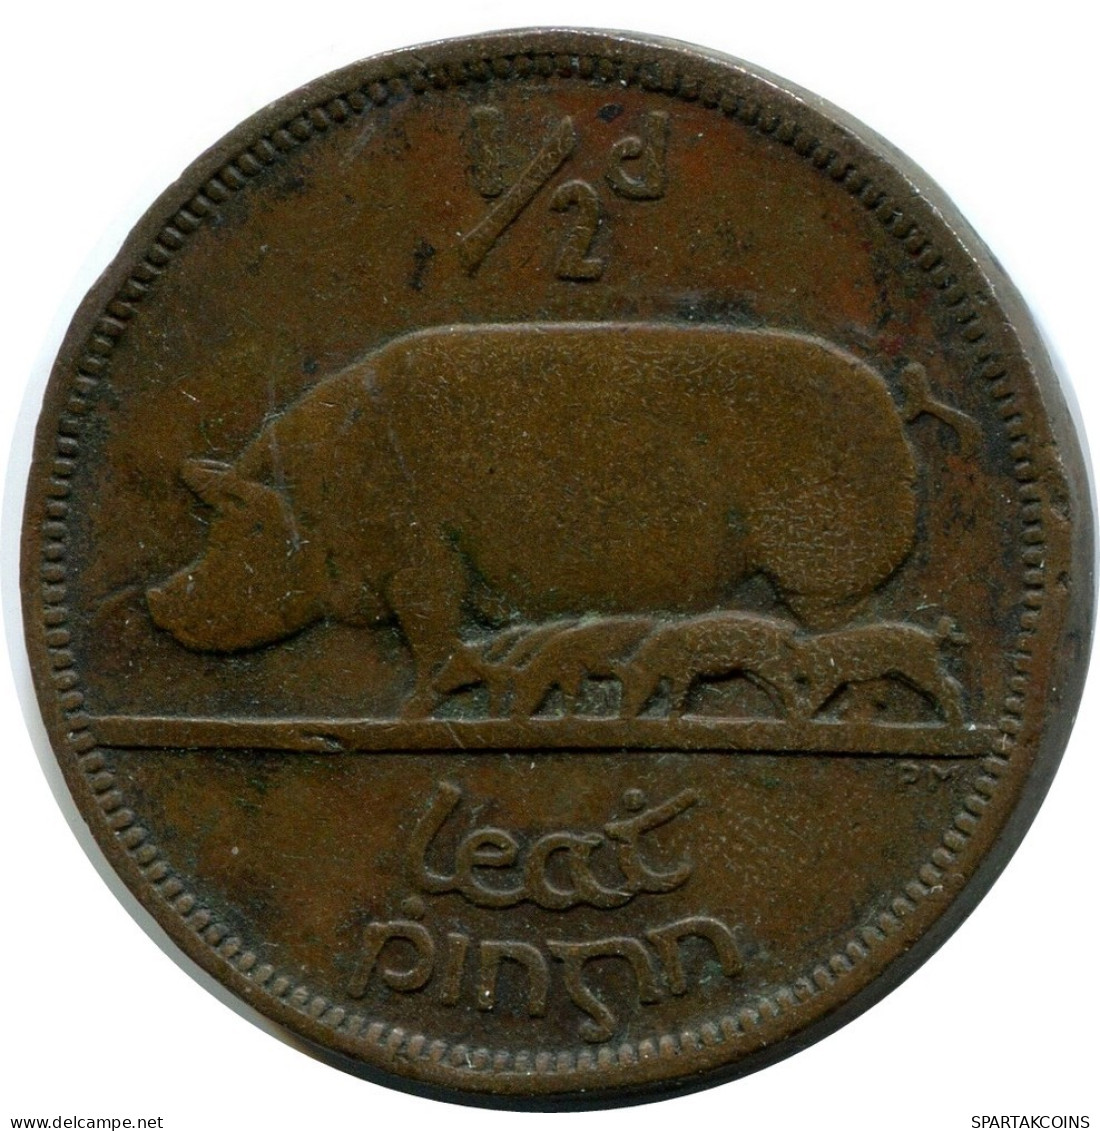 1/2 PENNY 1928 IRLANDA IRELAND Moneda #AY645.E.A - Irlanda